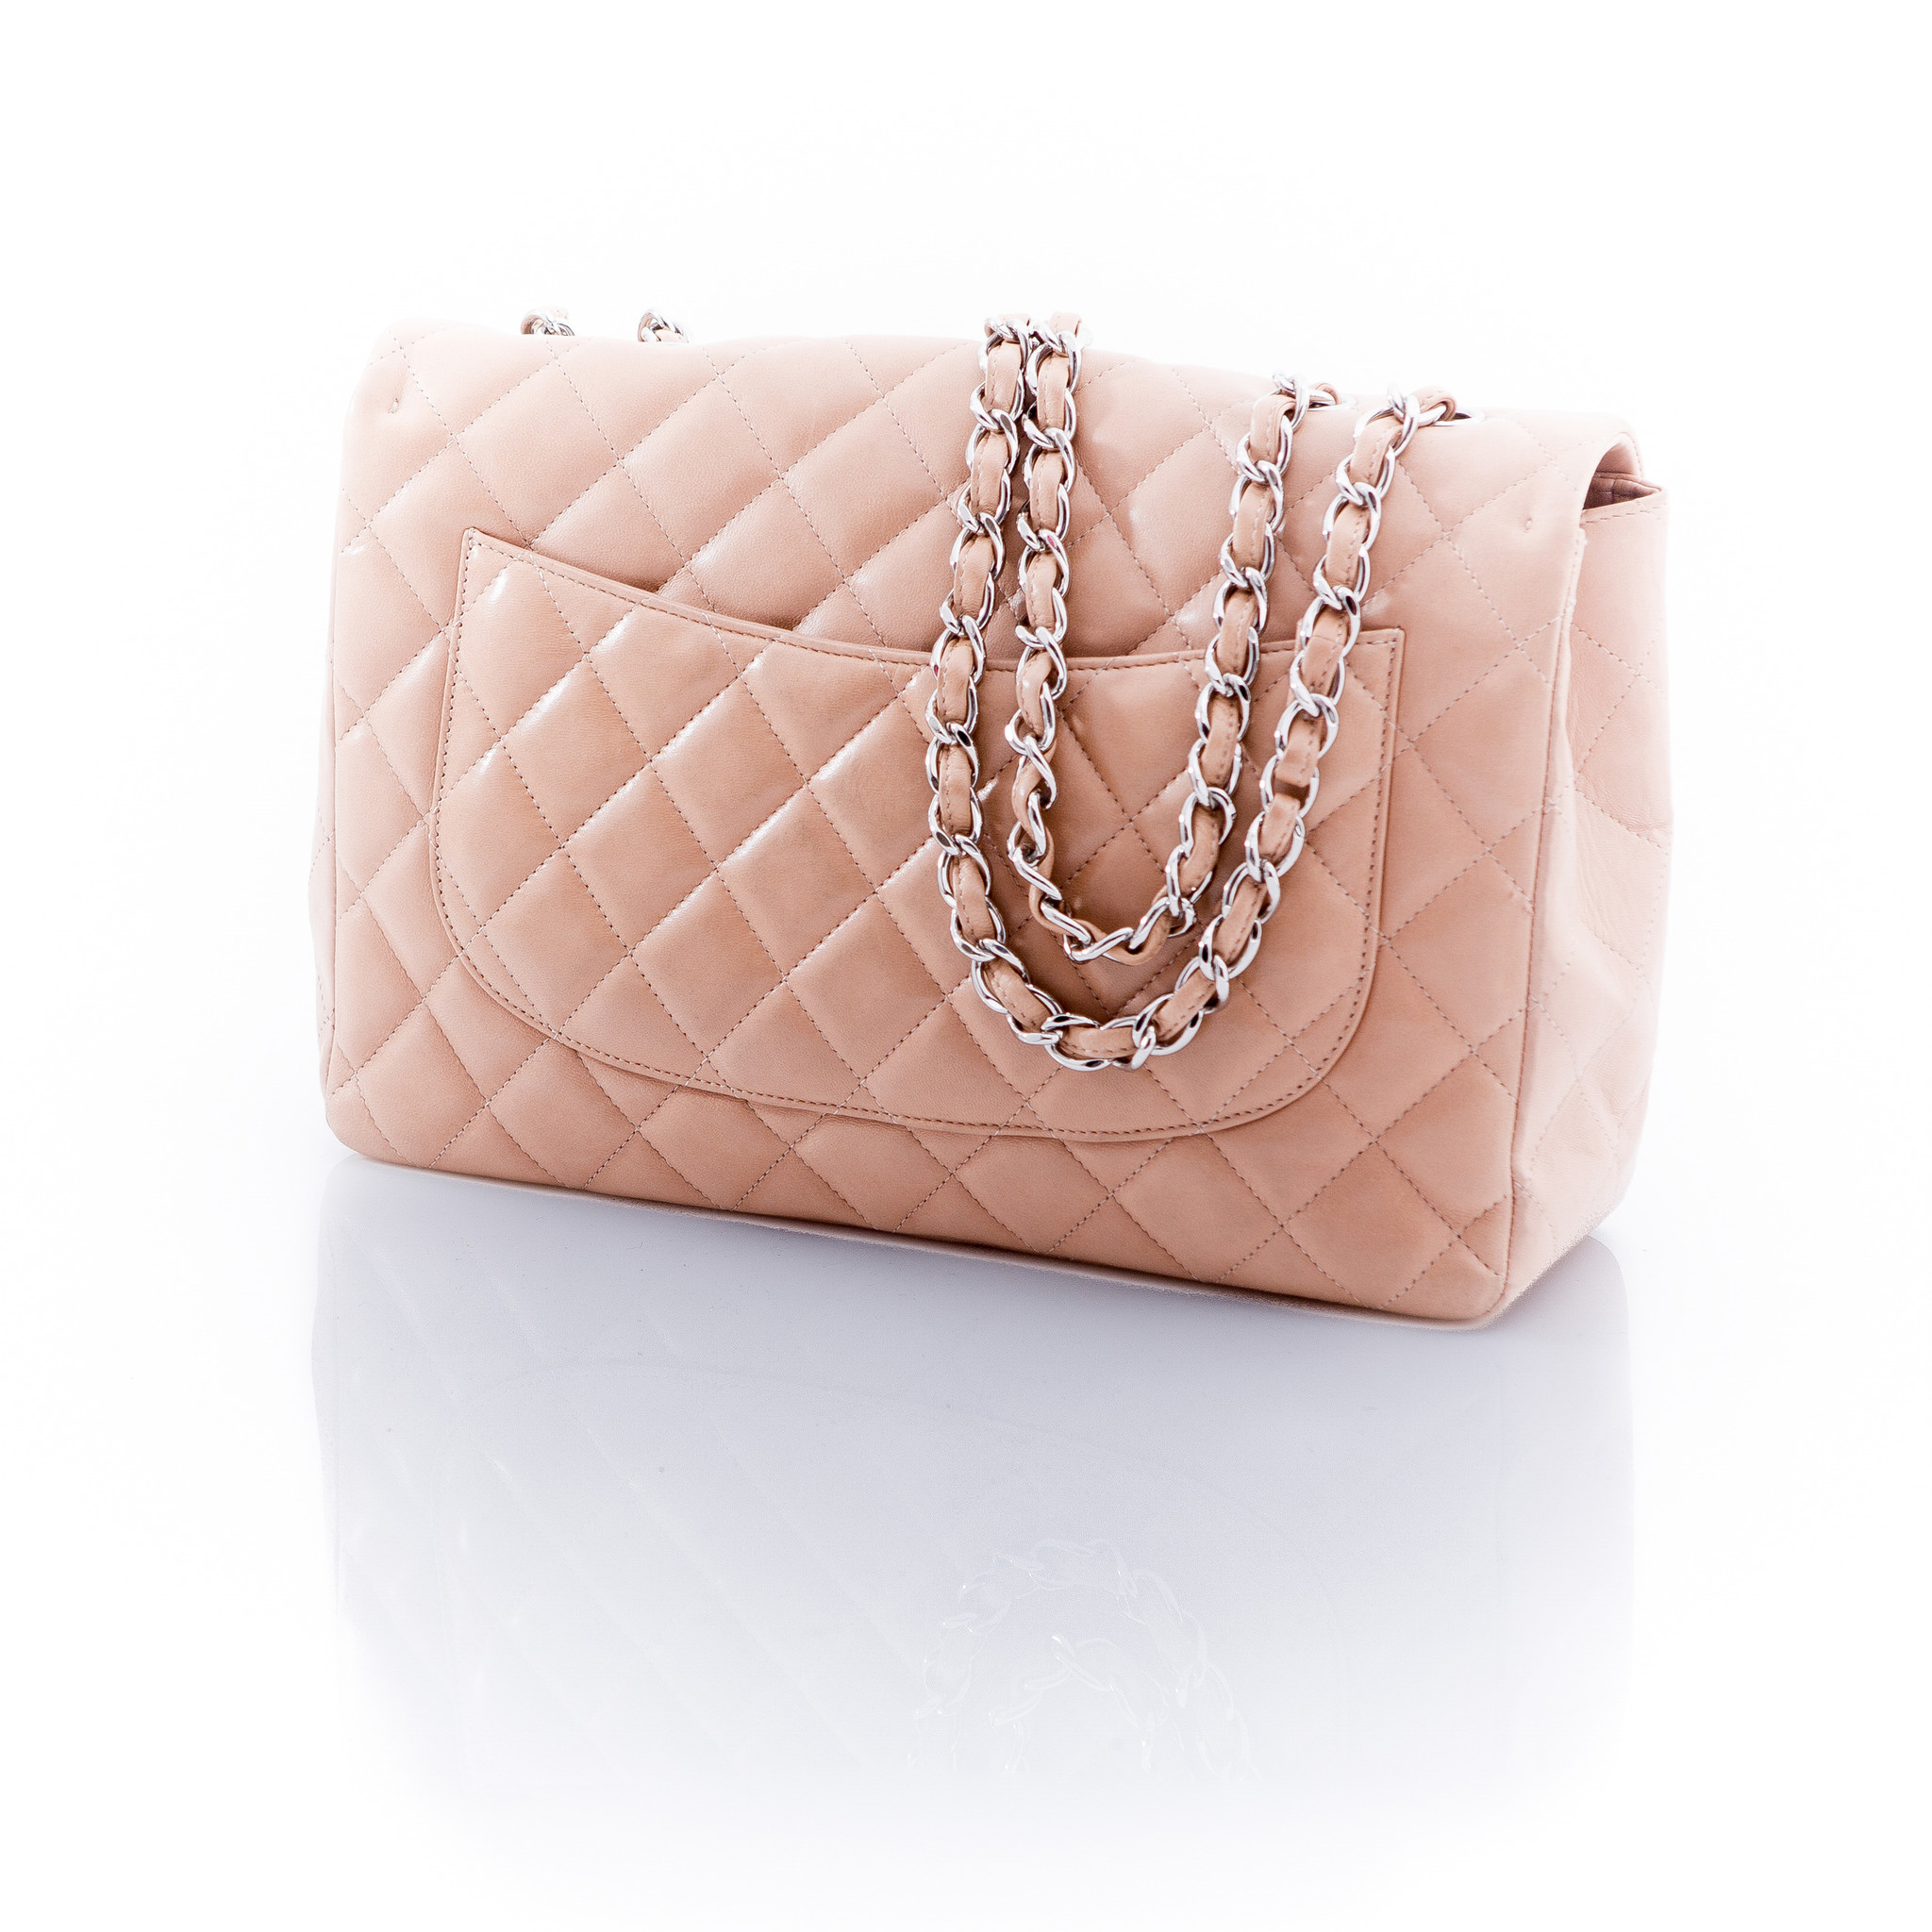 Chanel 2.55 Jumbo single flap bag in Nude - Unique Designer Pieces